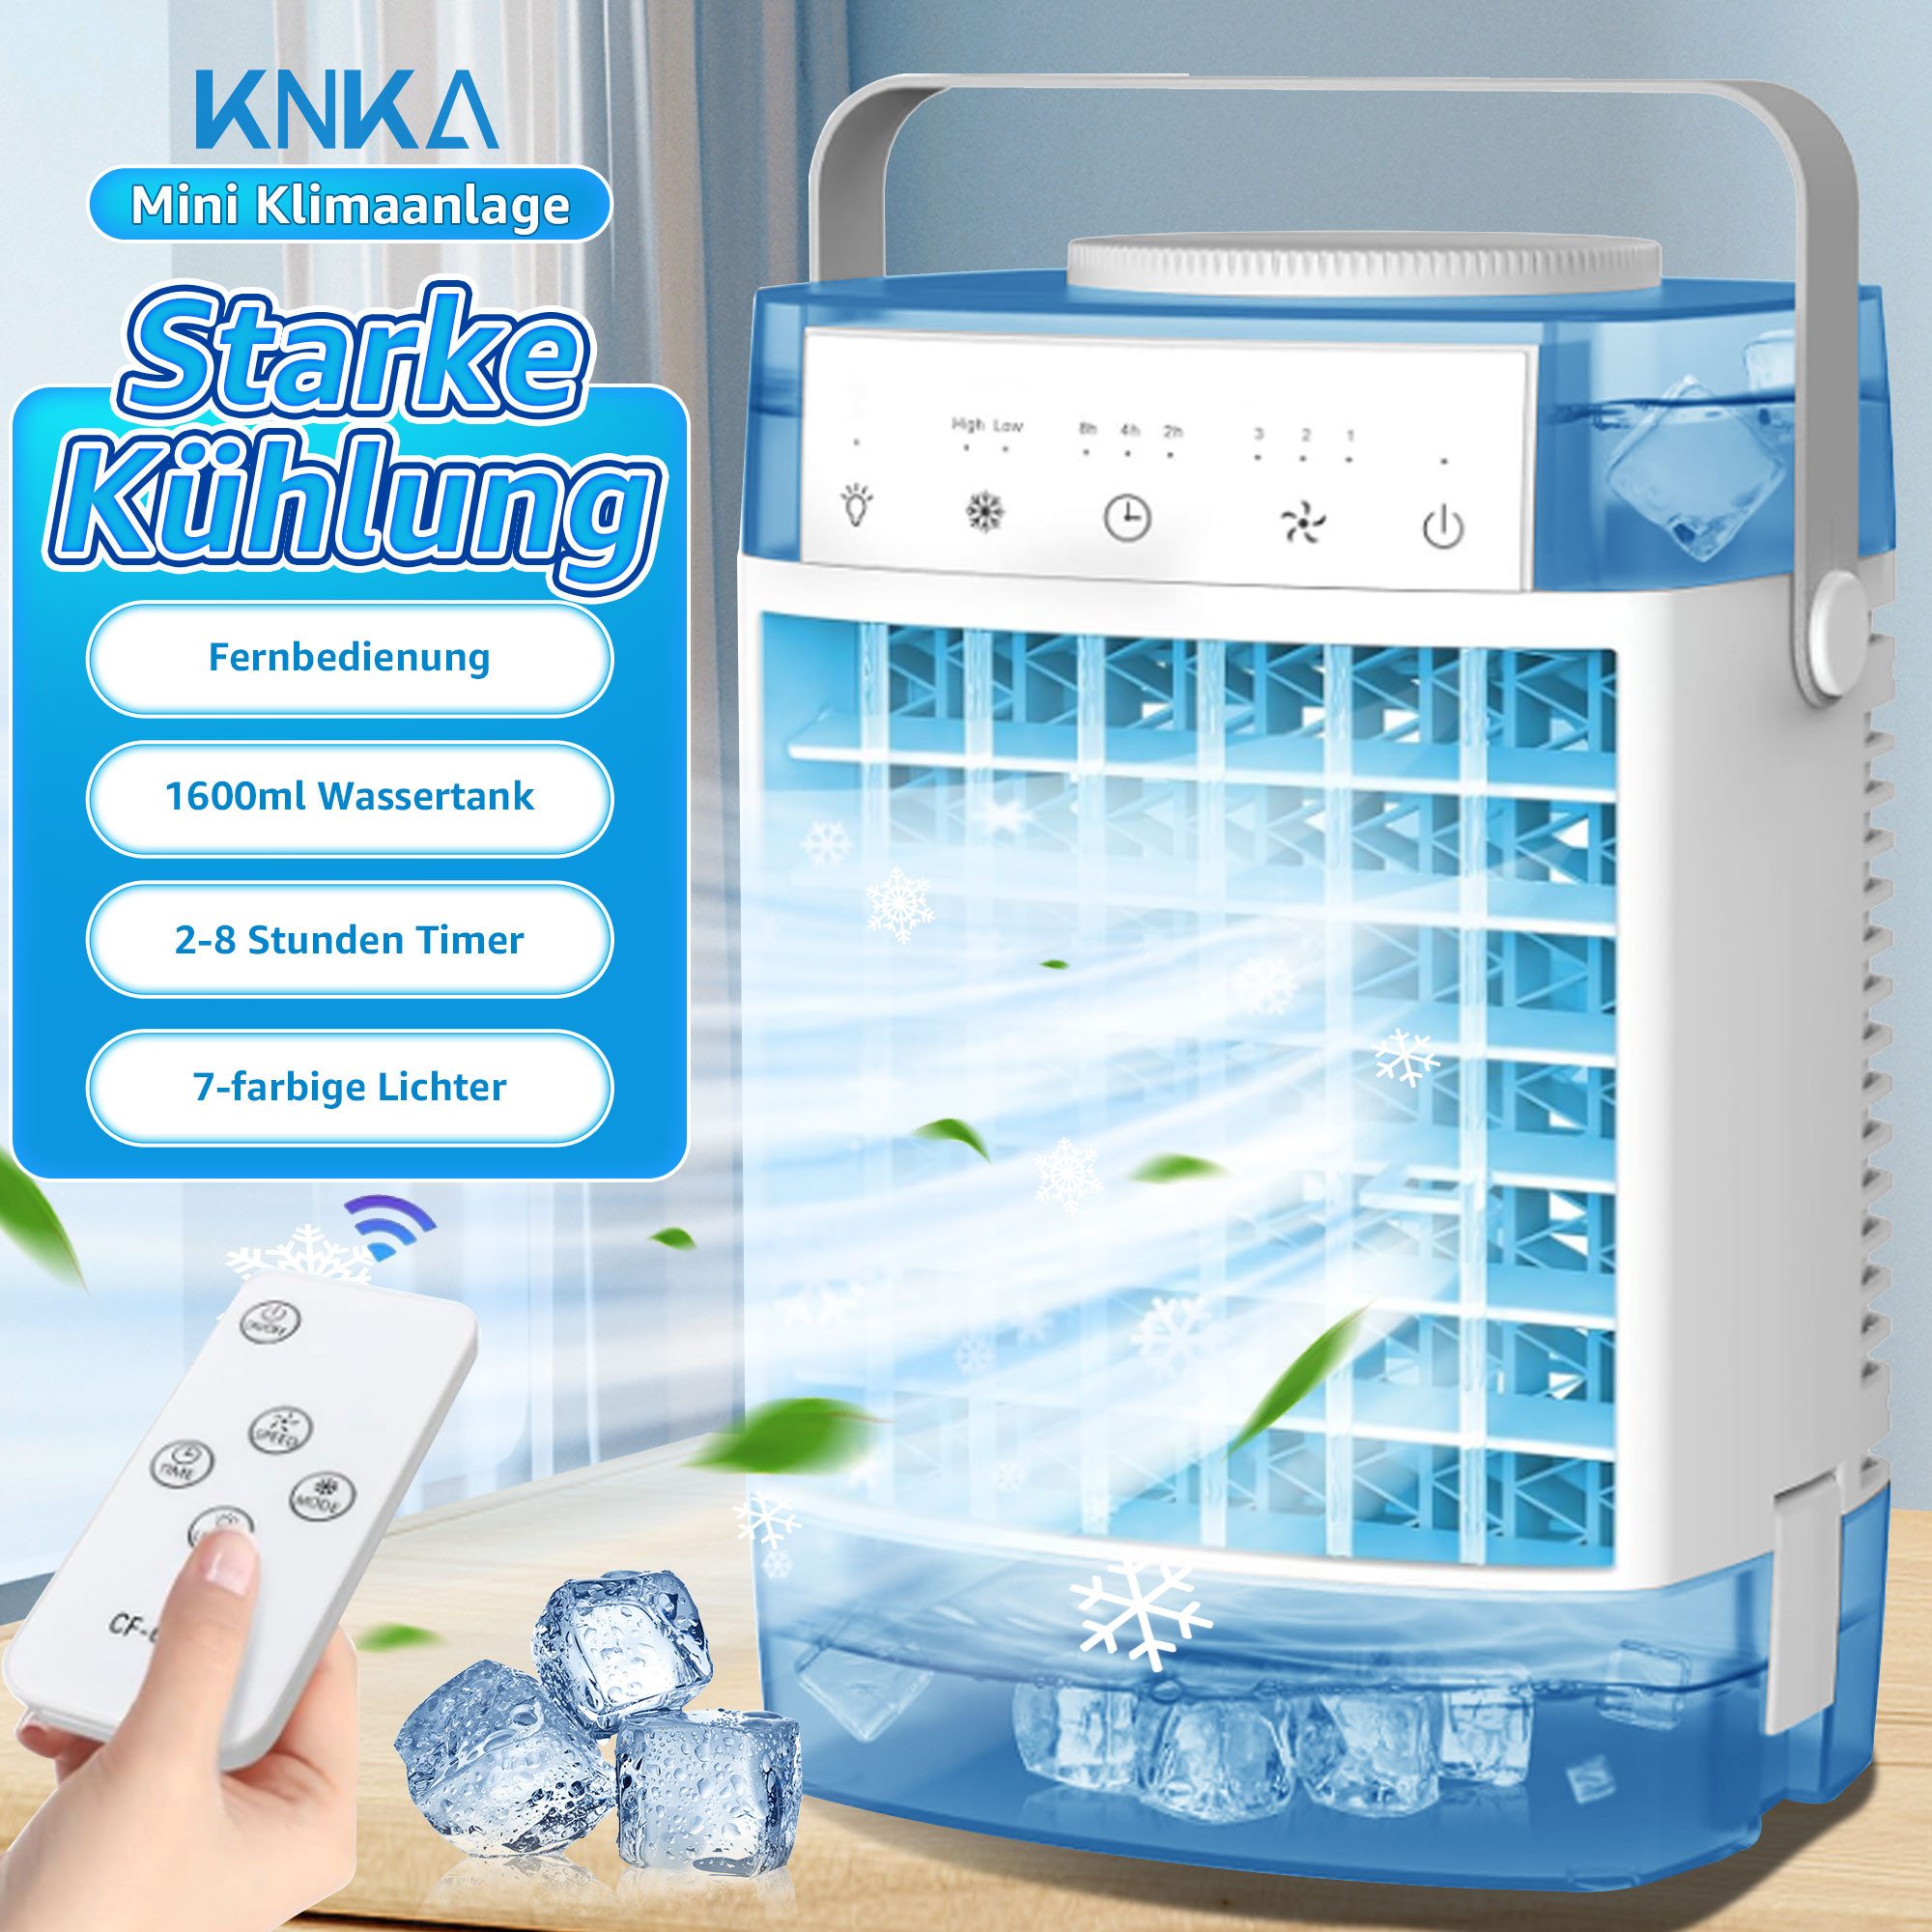 KNKA Ventilatorkombigerät, Klimaanlage Mobil, Luftkühler, Kühlung, Fernbedienung, Timer, 1600ML